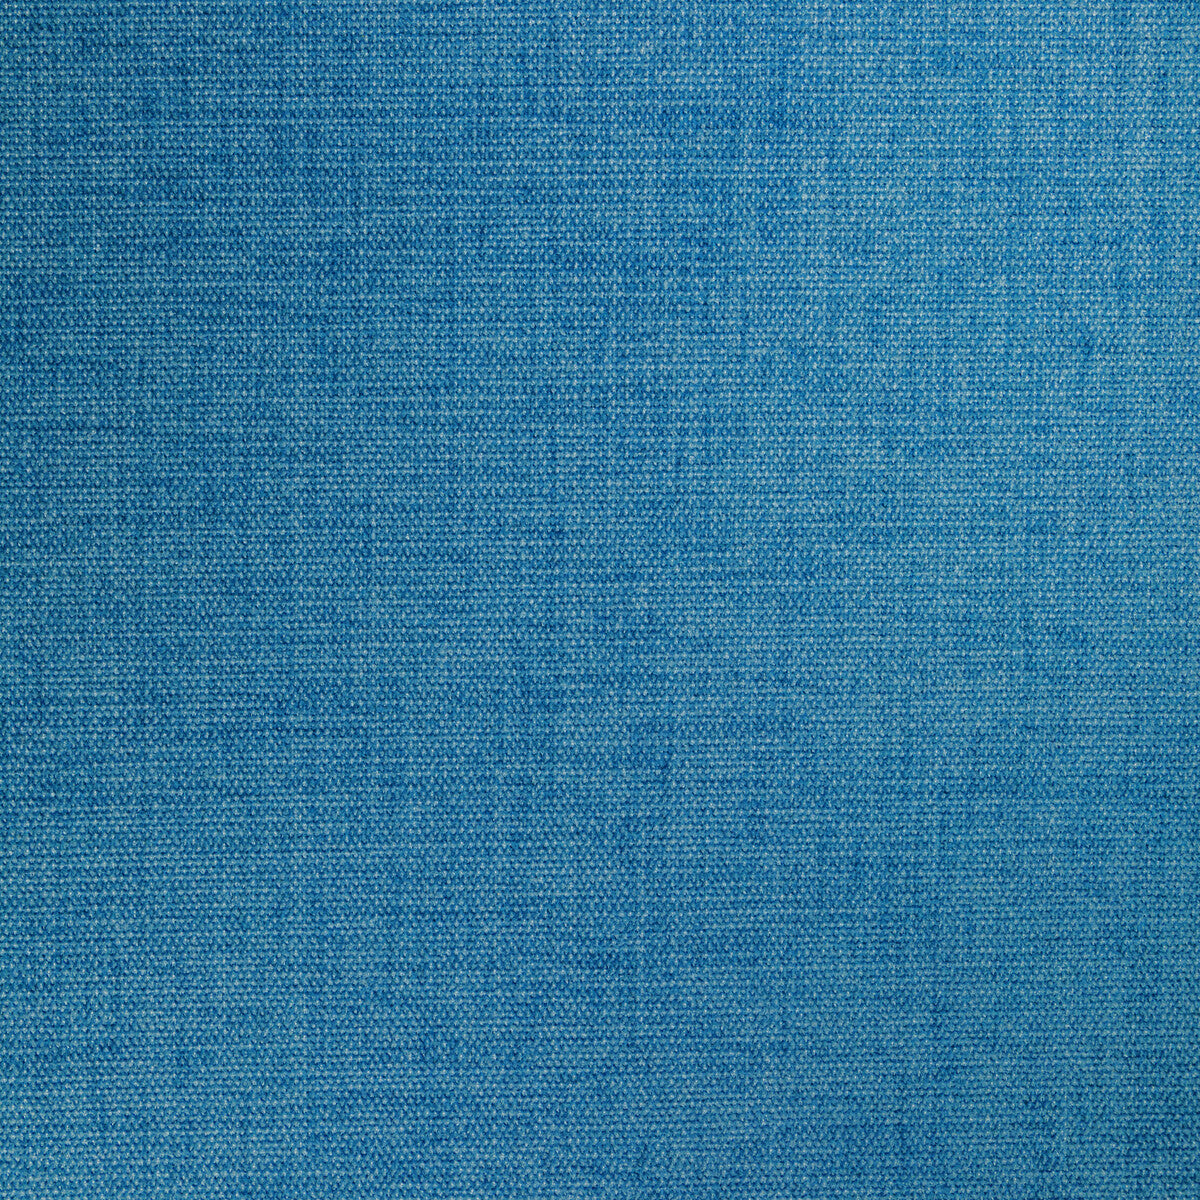 Kravet Smart fabric in 34959-15 color - pattern 34959.15.0 - by Kravet Smart in the Performance Kravetarmor collection